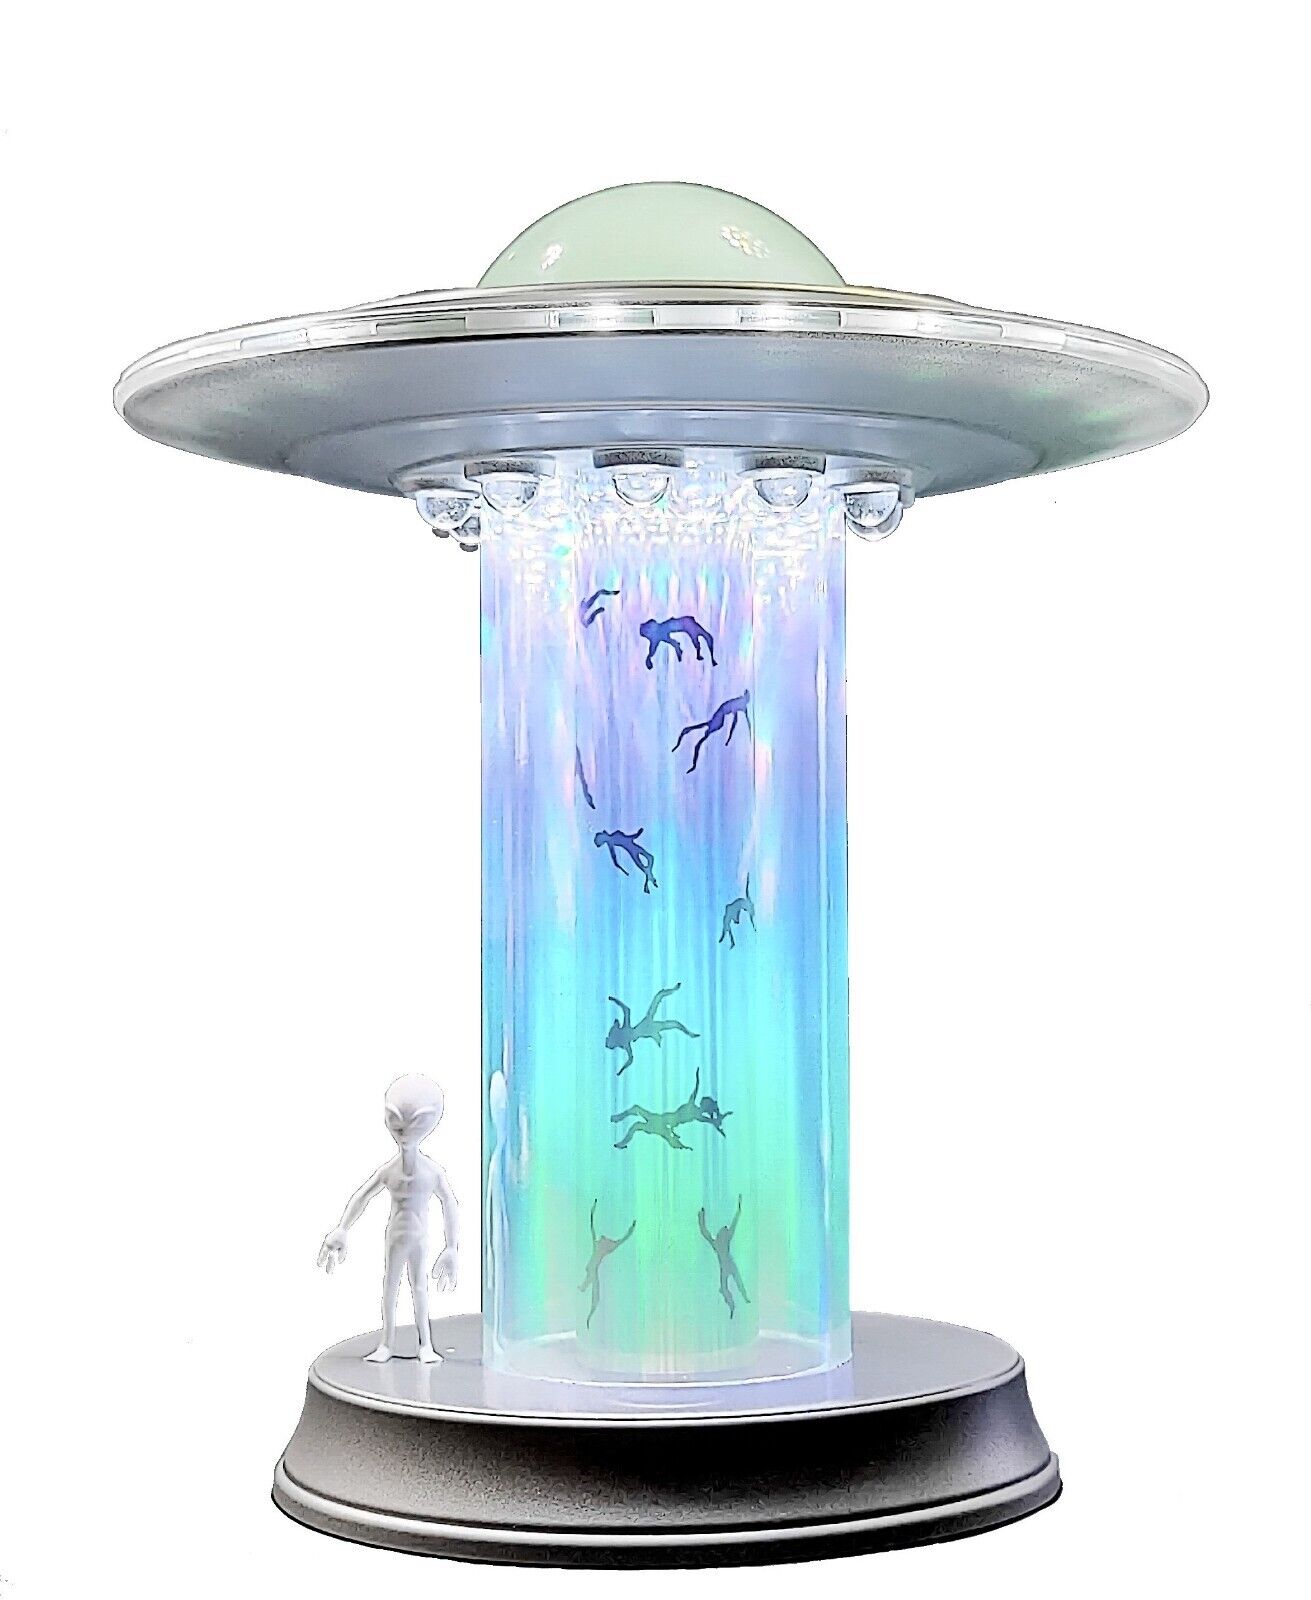 UFO Model Human Abduction Touch Table Lamp LED Alien Encounter Decor Area 51